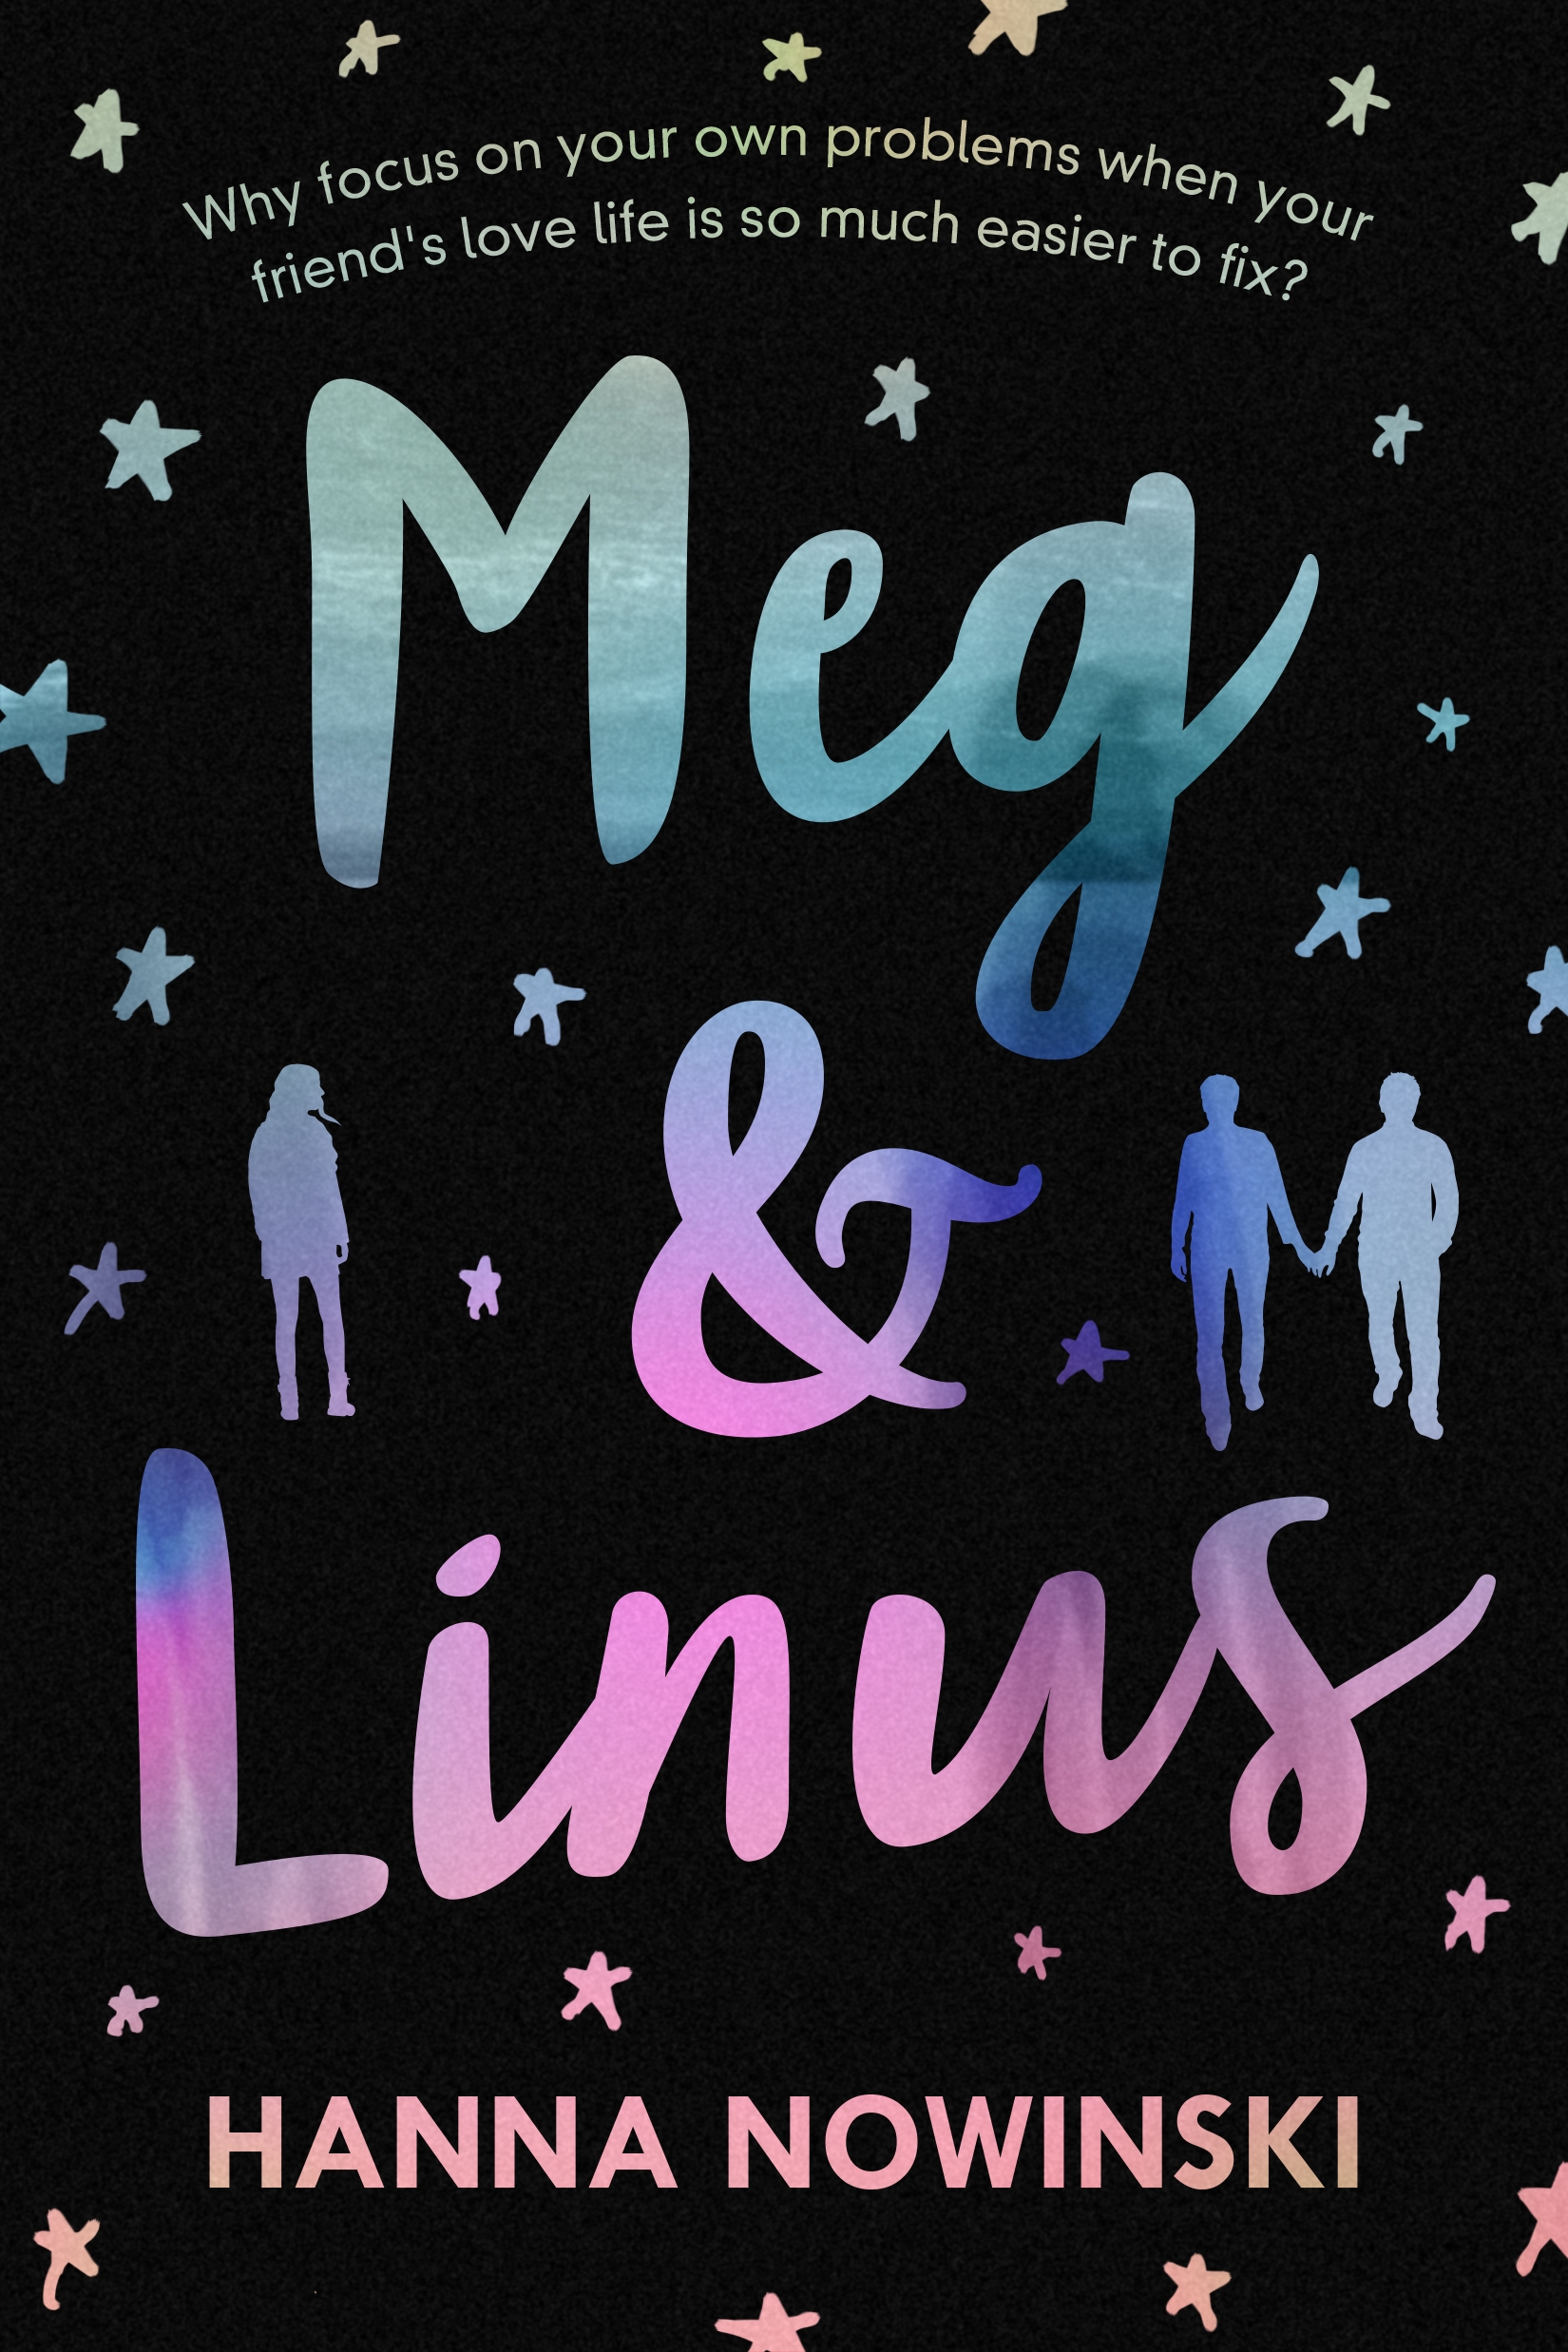 Book Meg & Linus